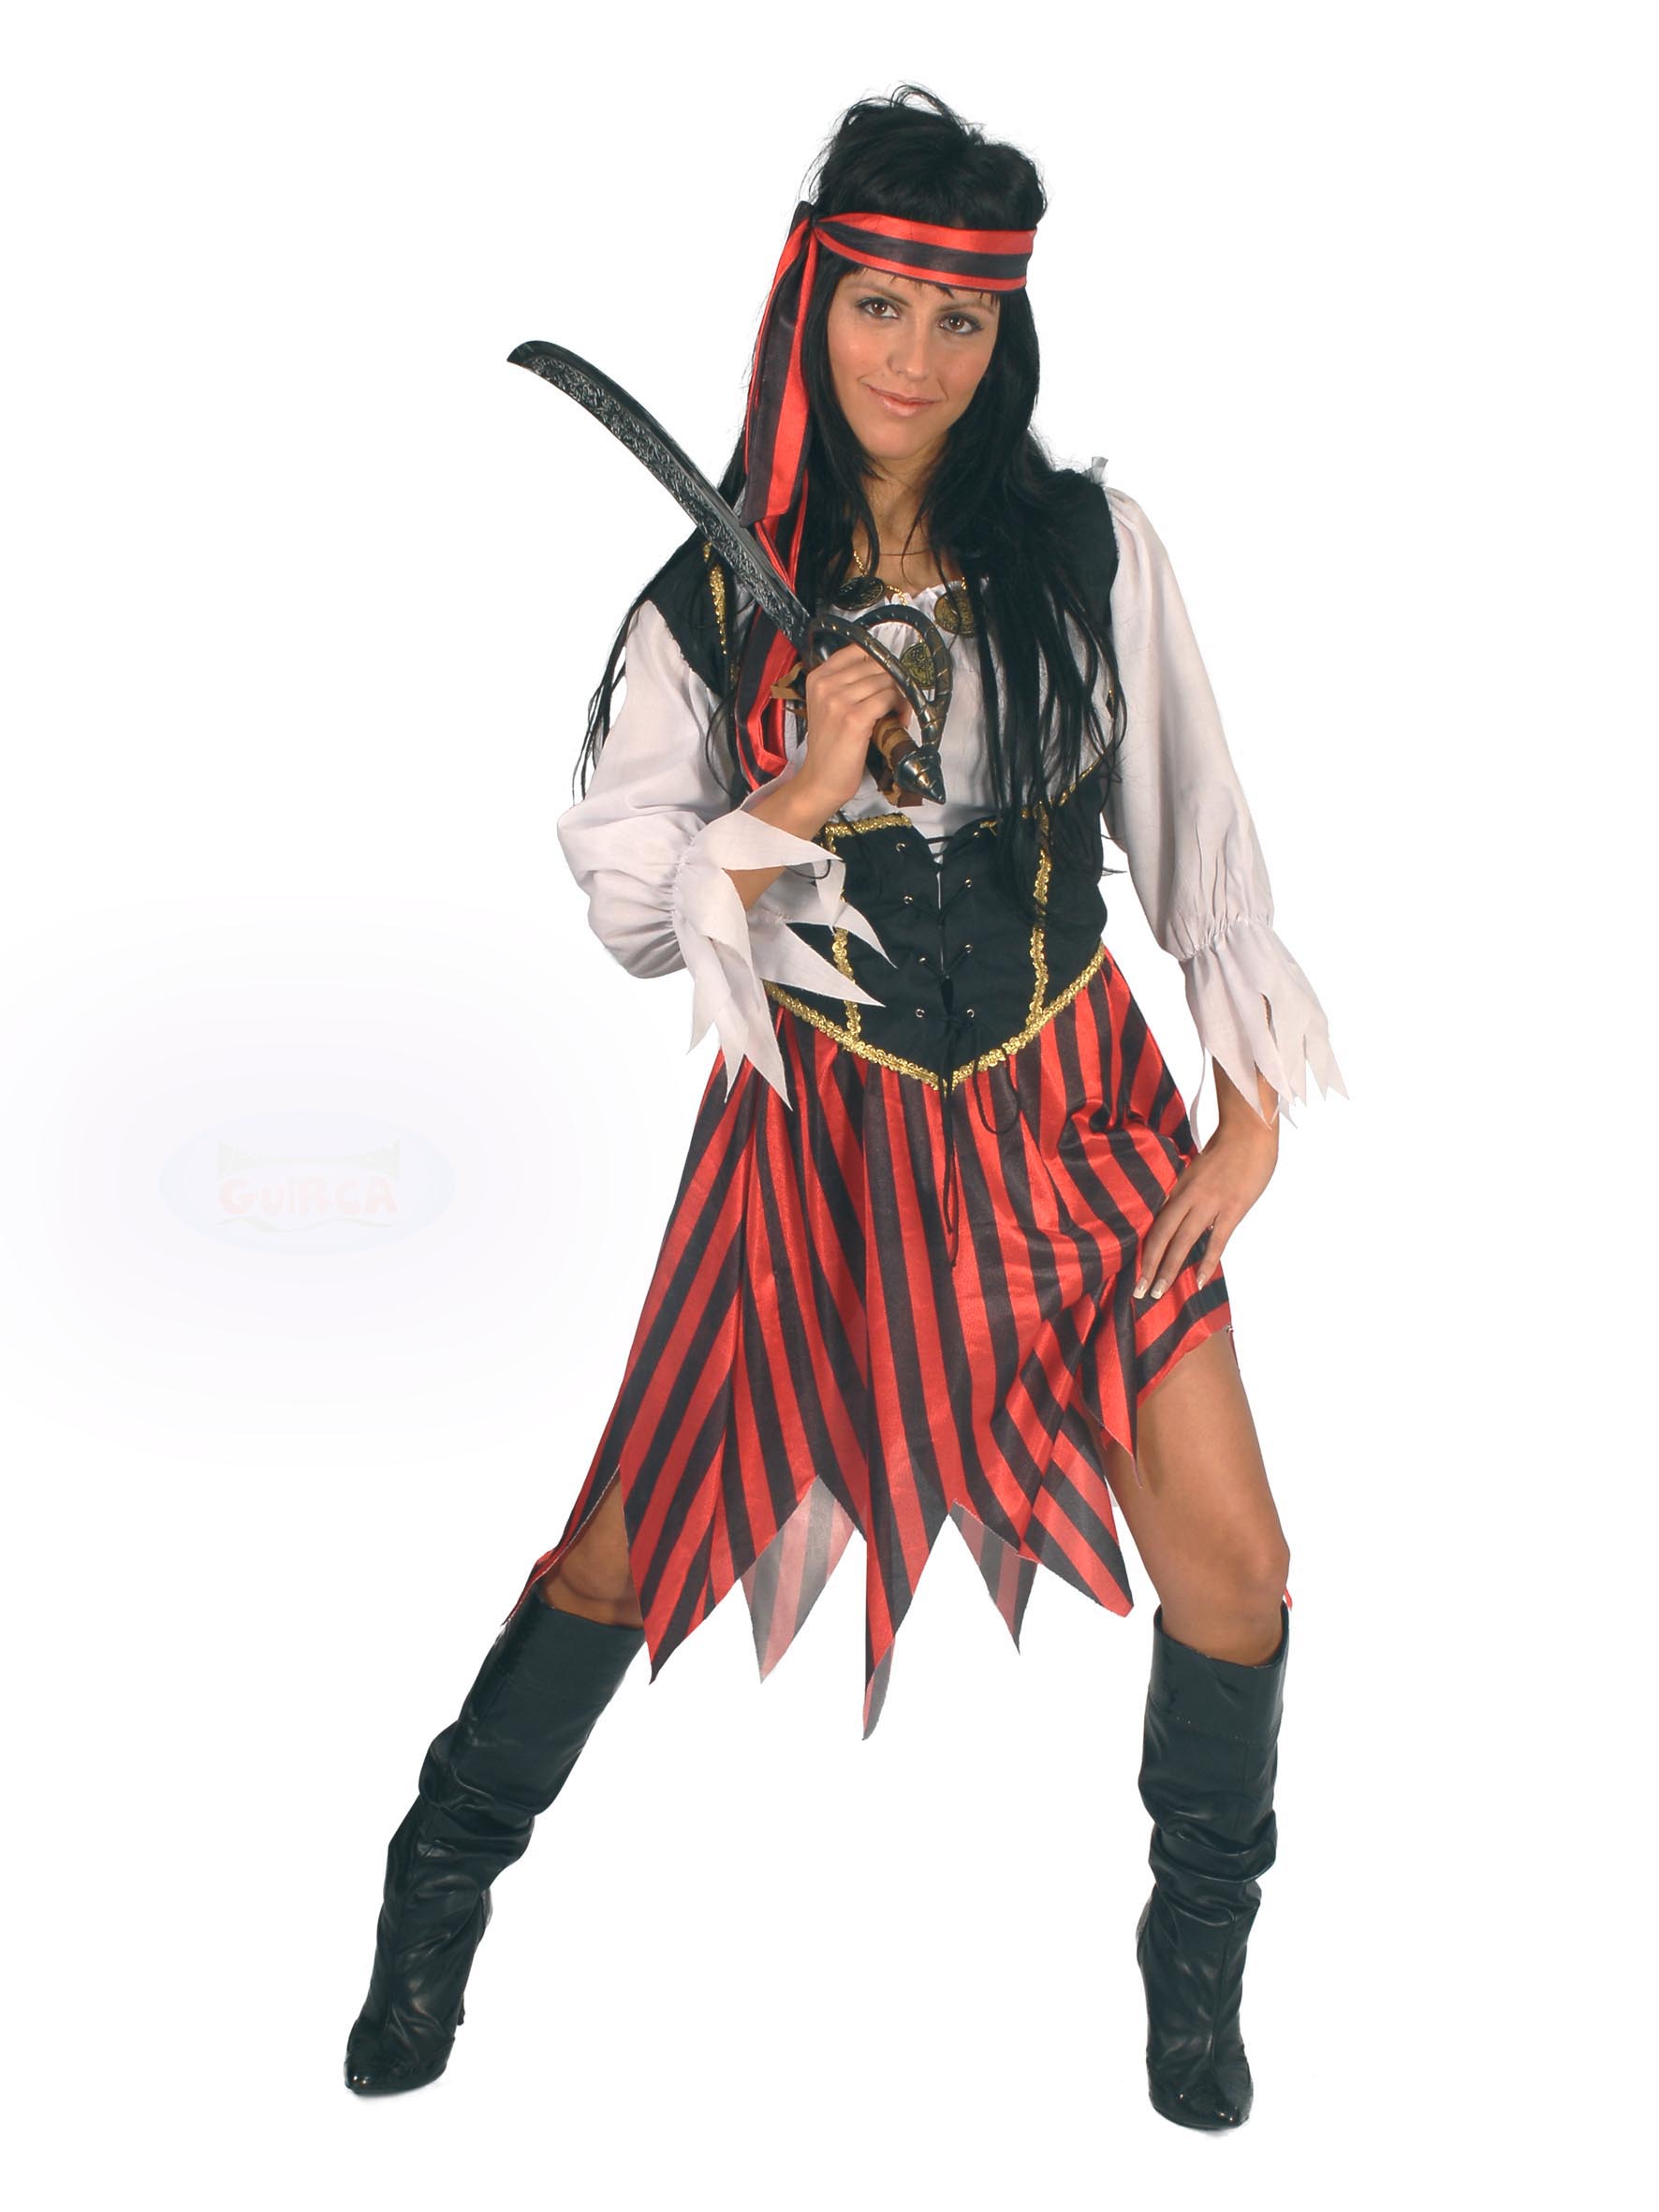 Costume di pirata donna bucaniere